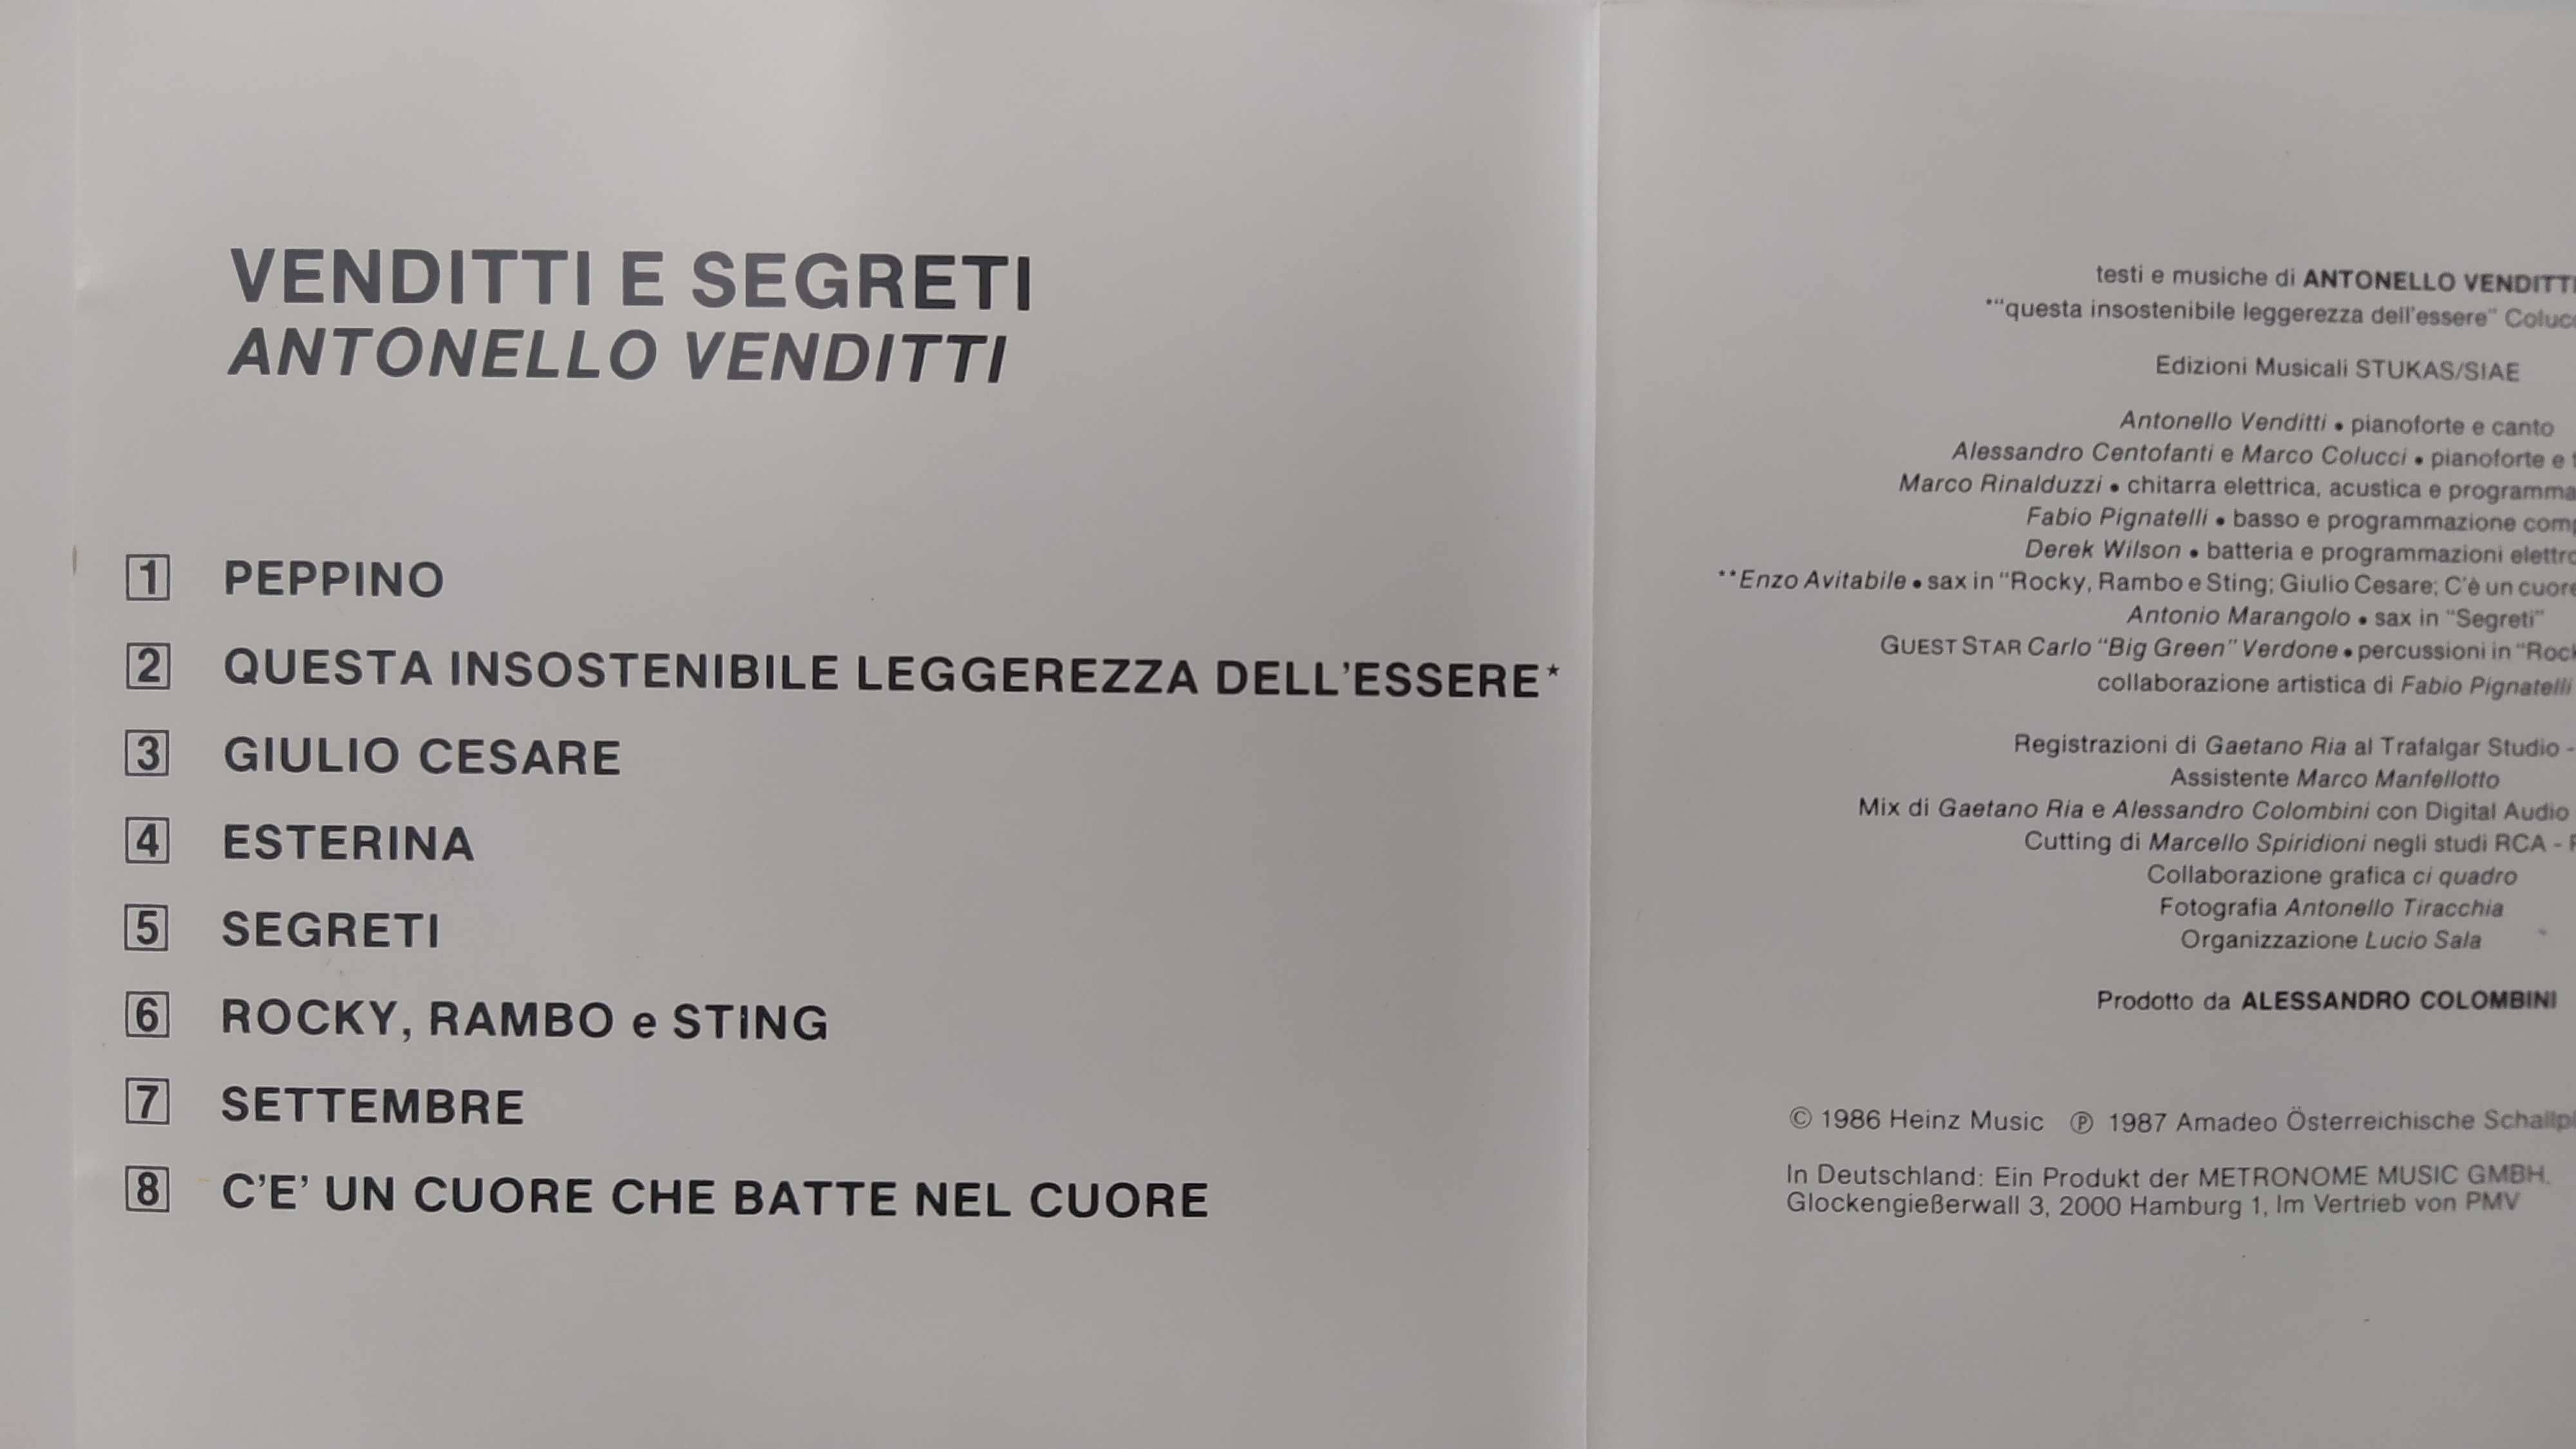 Antonello Venditti  Venditti E Segreti płyta CD piosenka włoska